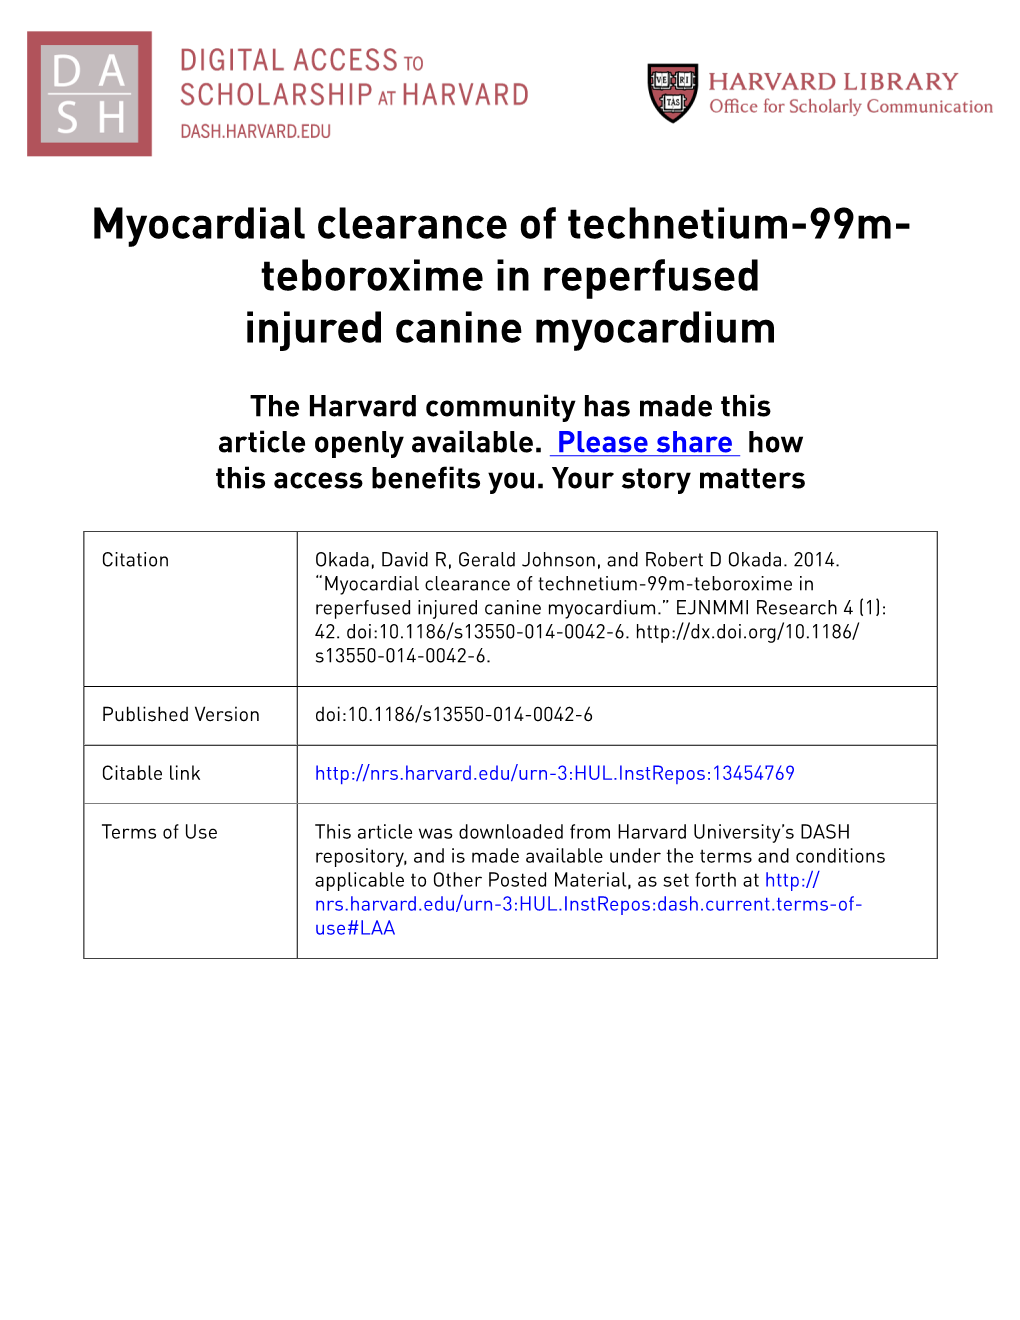 Teboroxime in Reperfused Injured Canine Myocardium